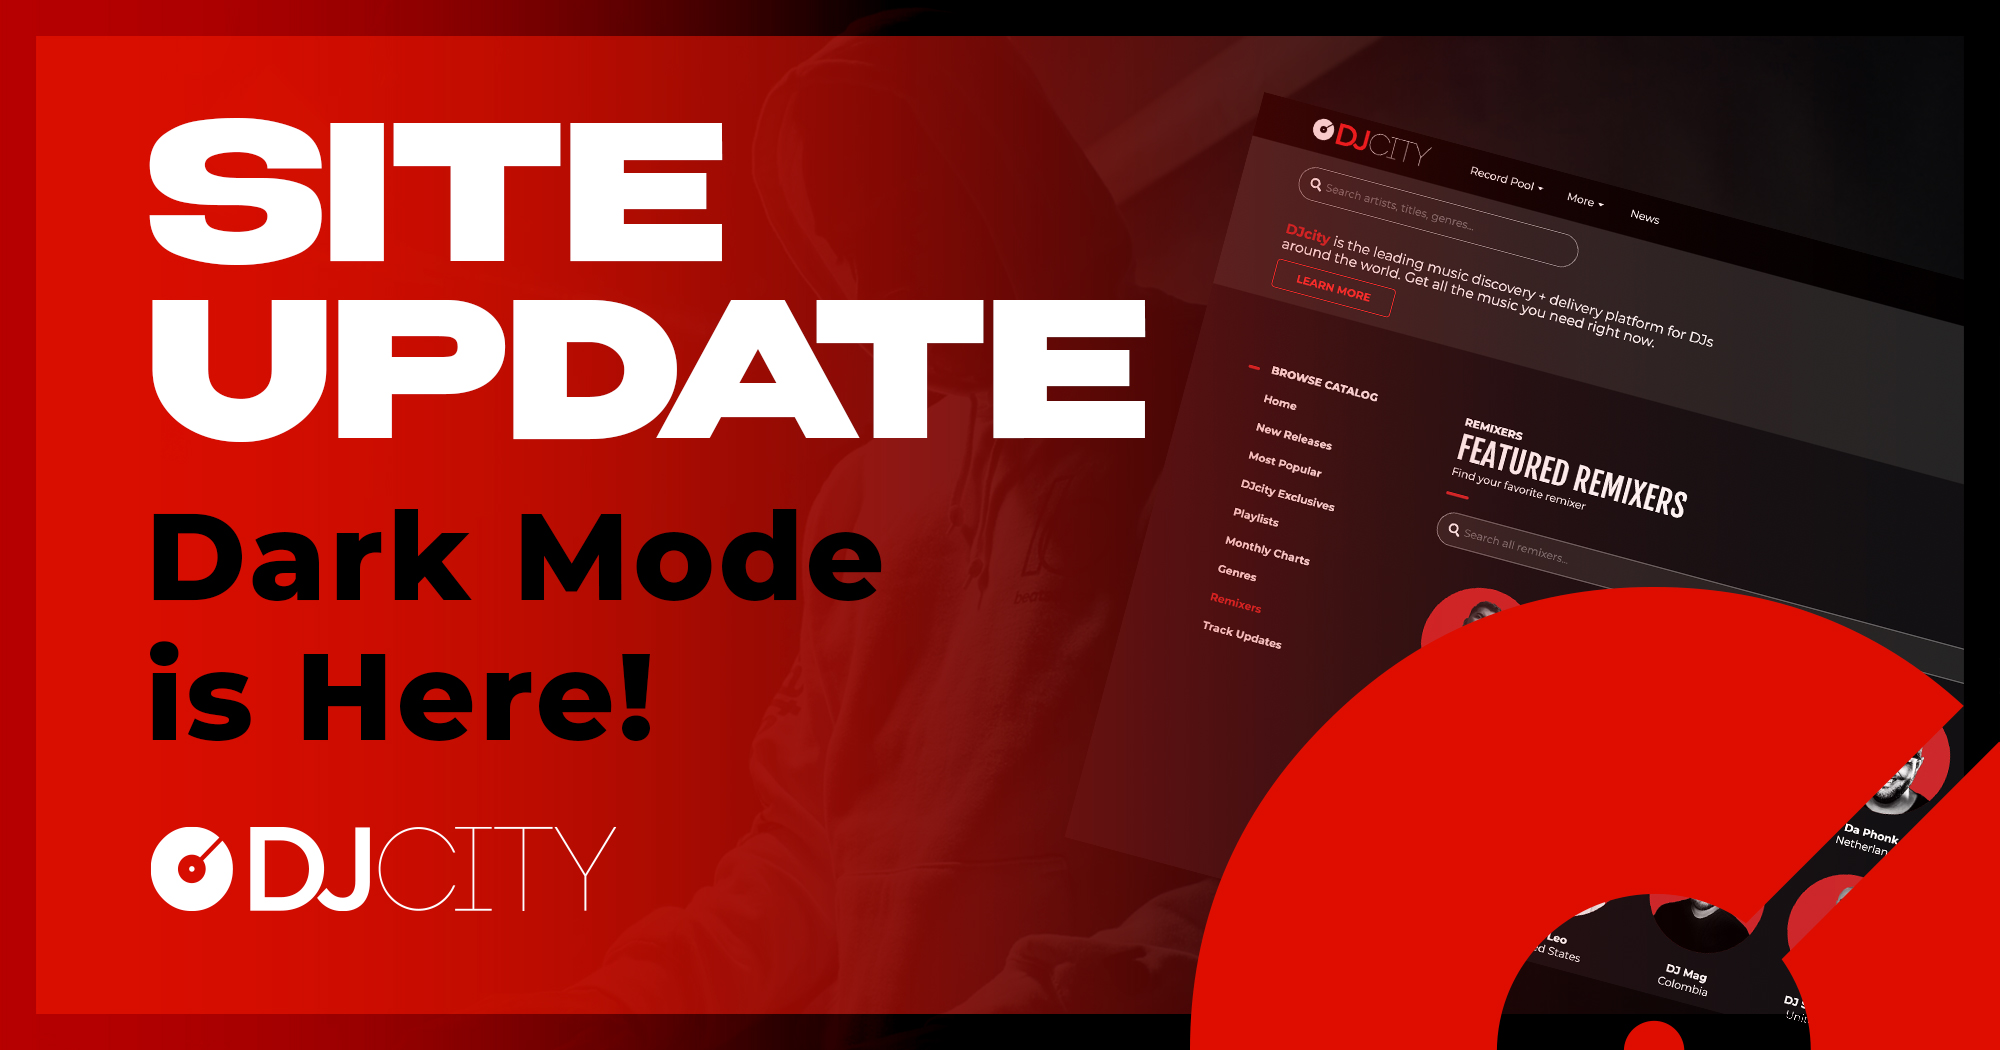 Website Update: DJcity Launches Dark Mode and New Remixers Page